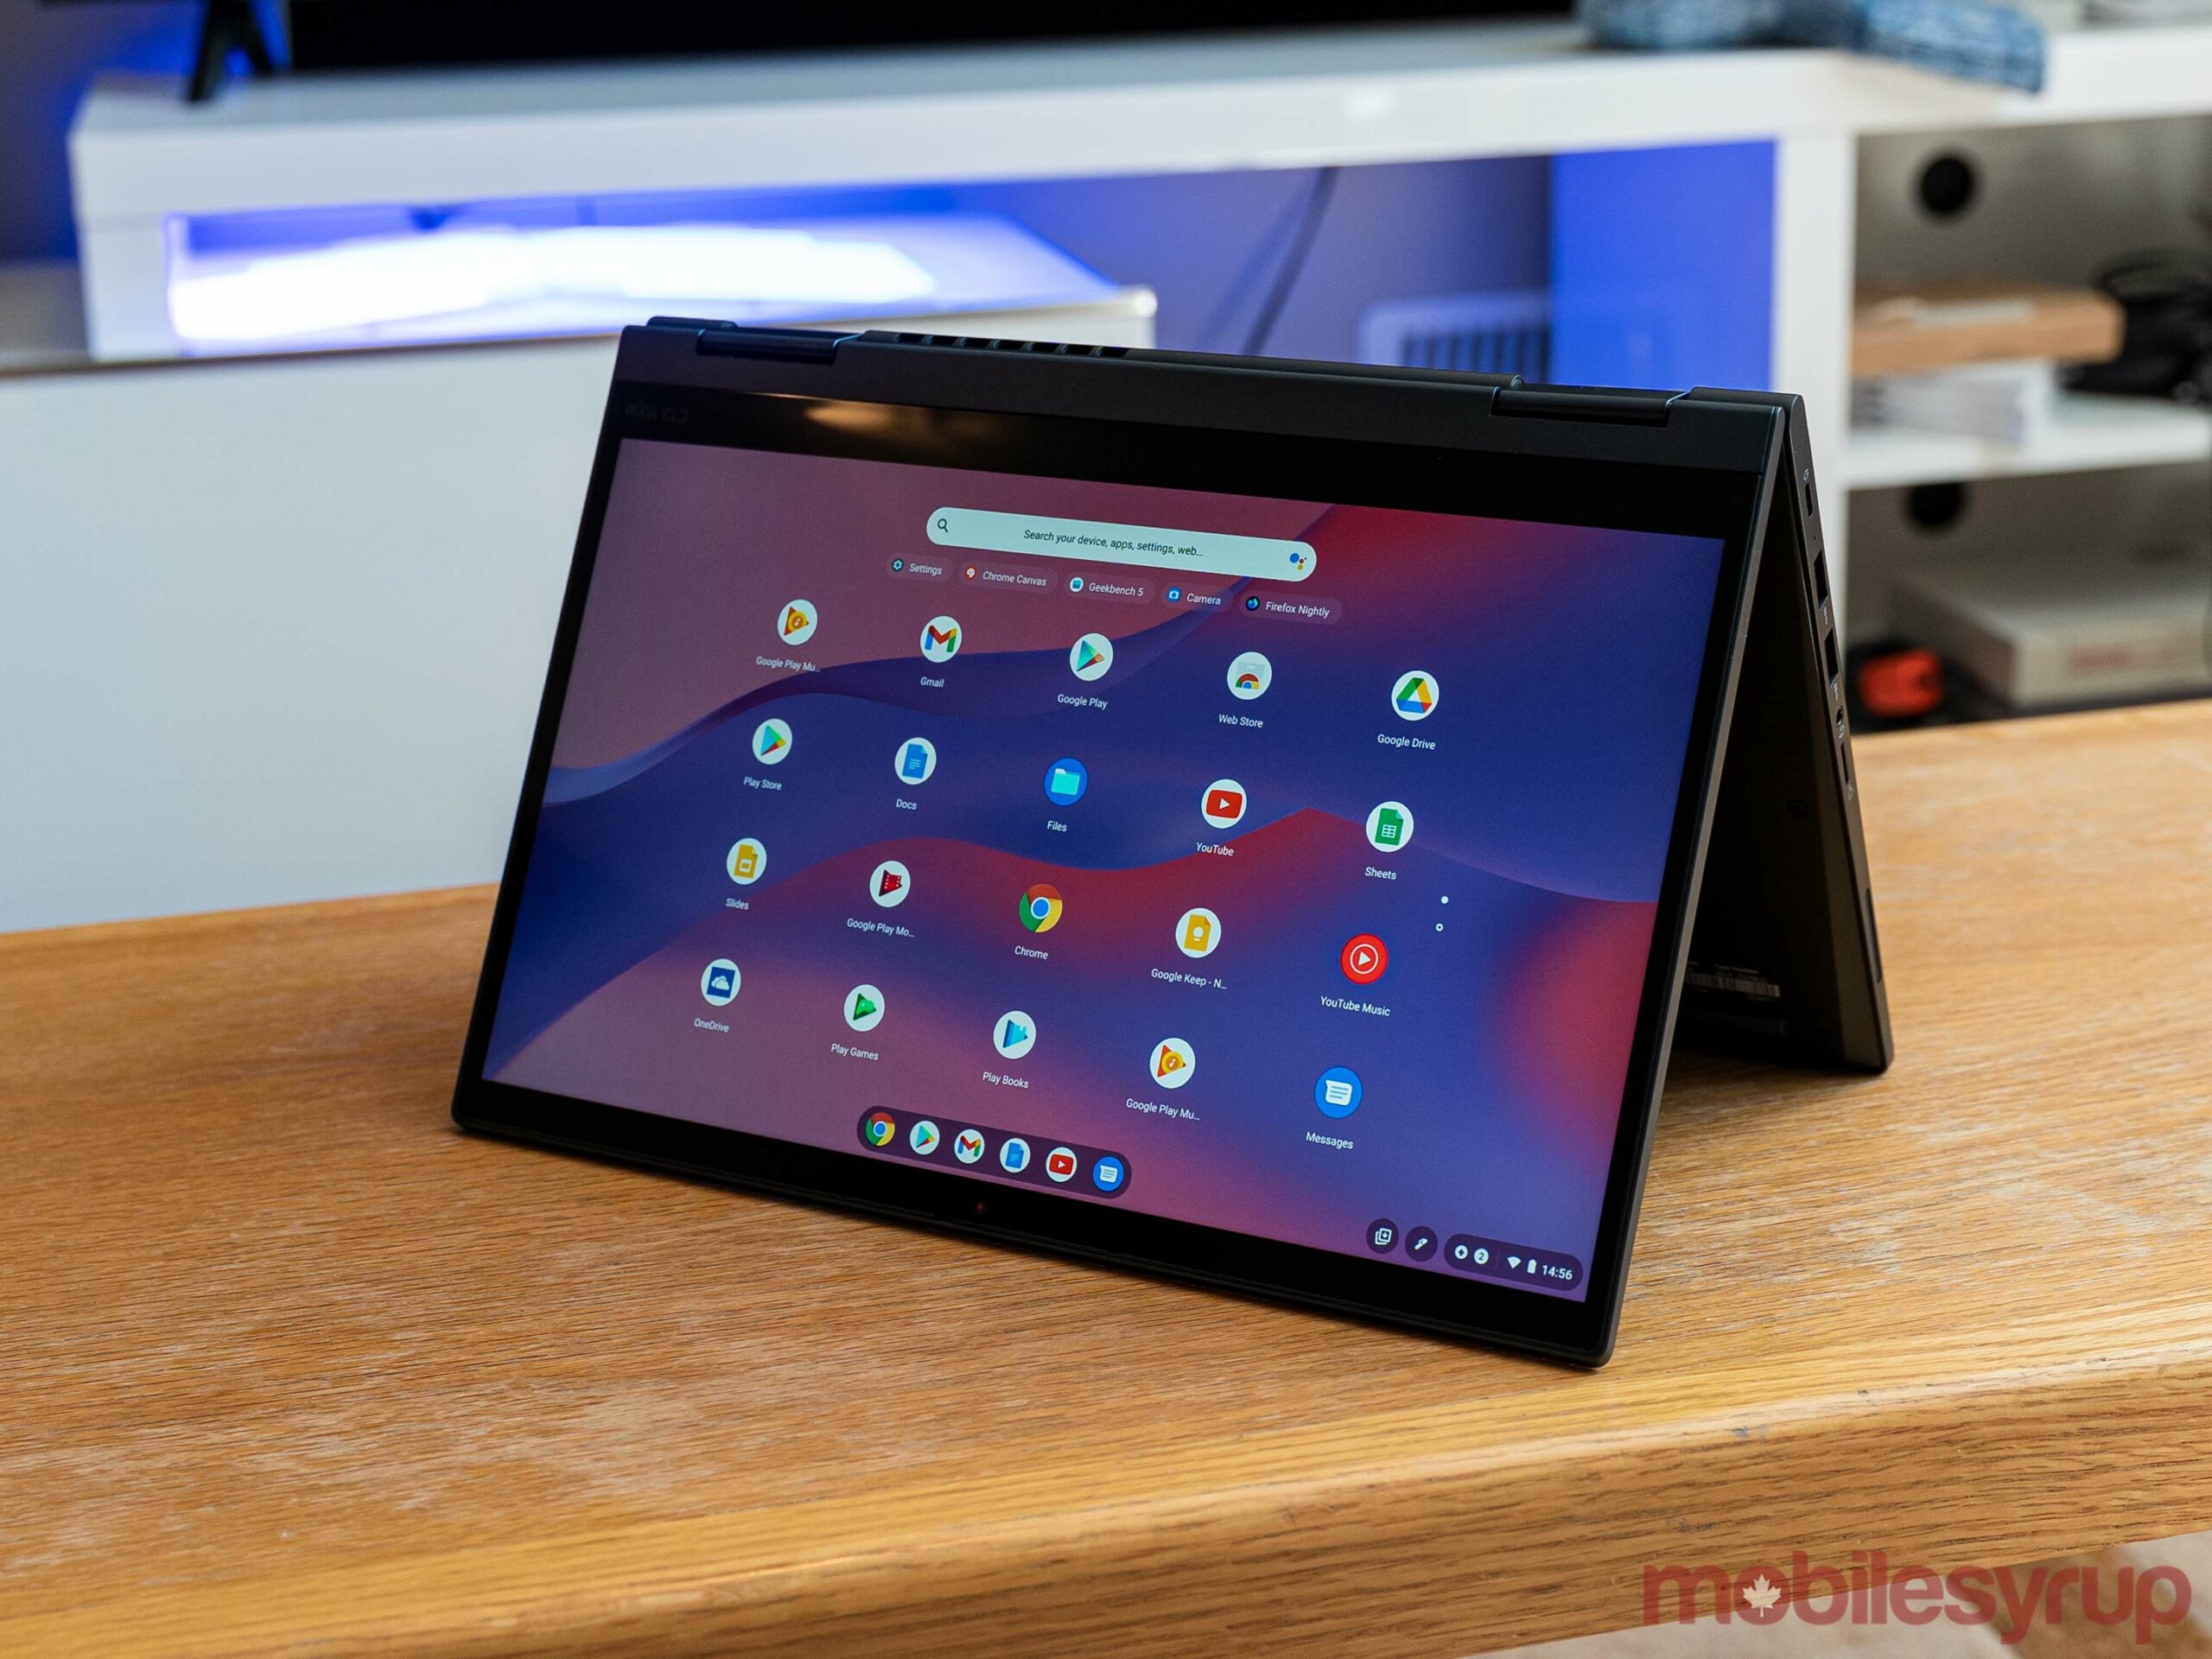 Lenovo ThinkPad C13 Yoga Gen 1 in tent mode